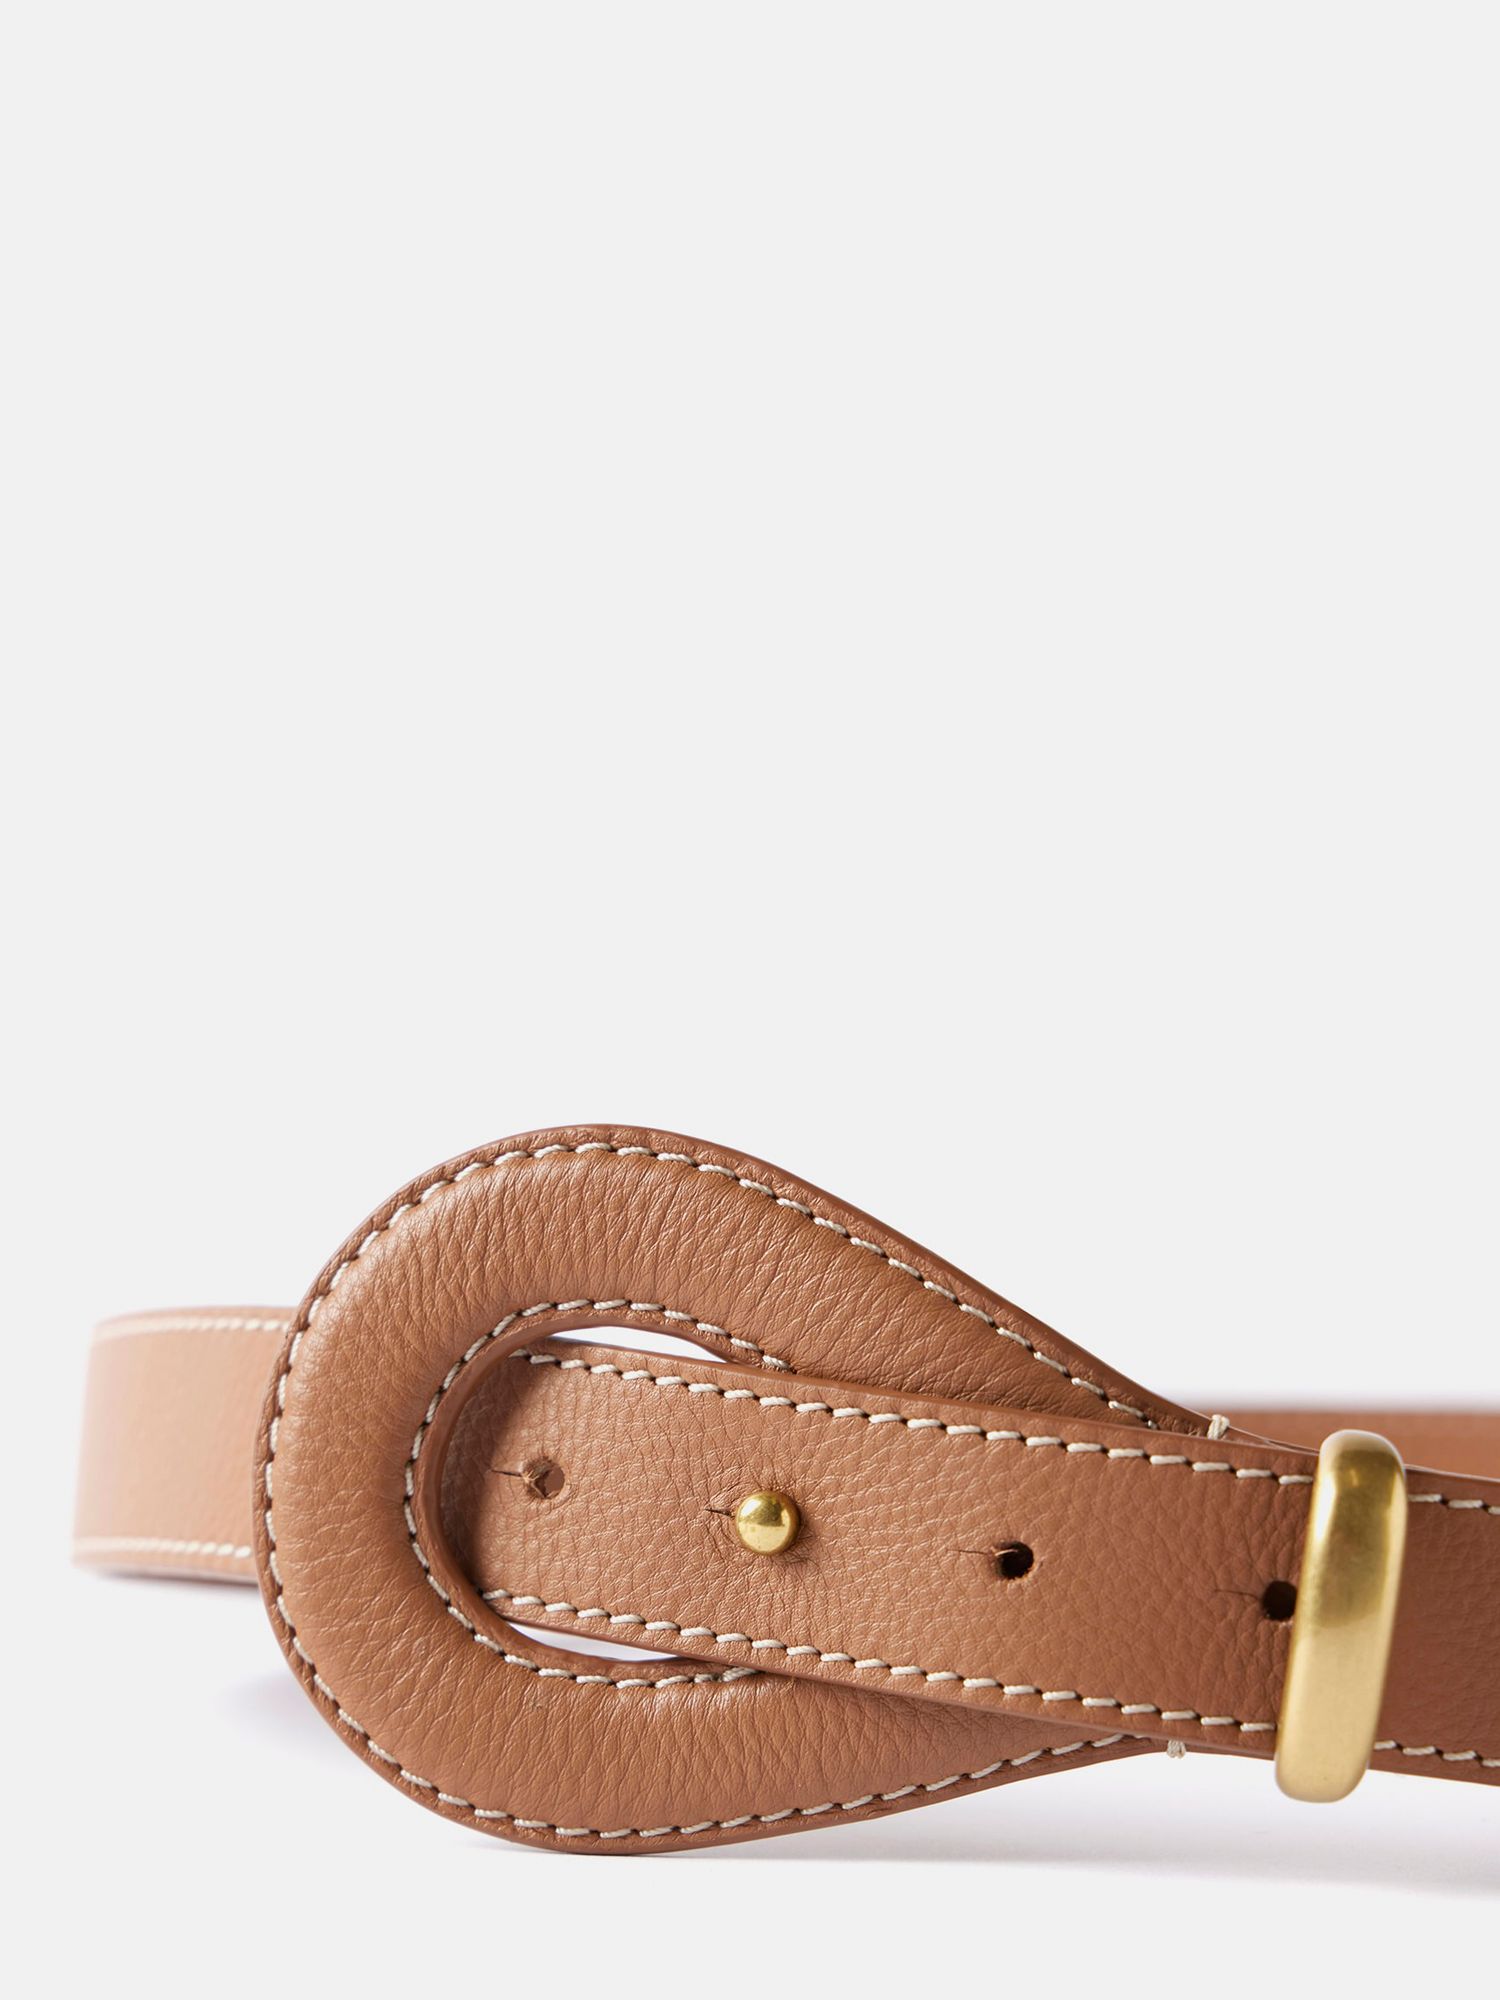 Mint Velvet Contrast Stitch Leather Belt, Brown Tan, M-L